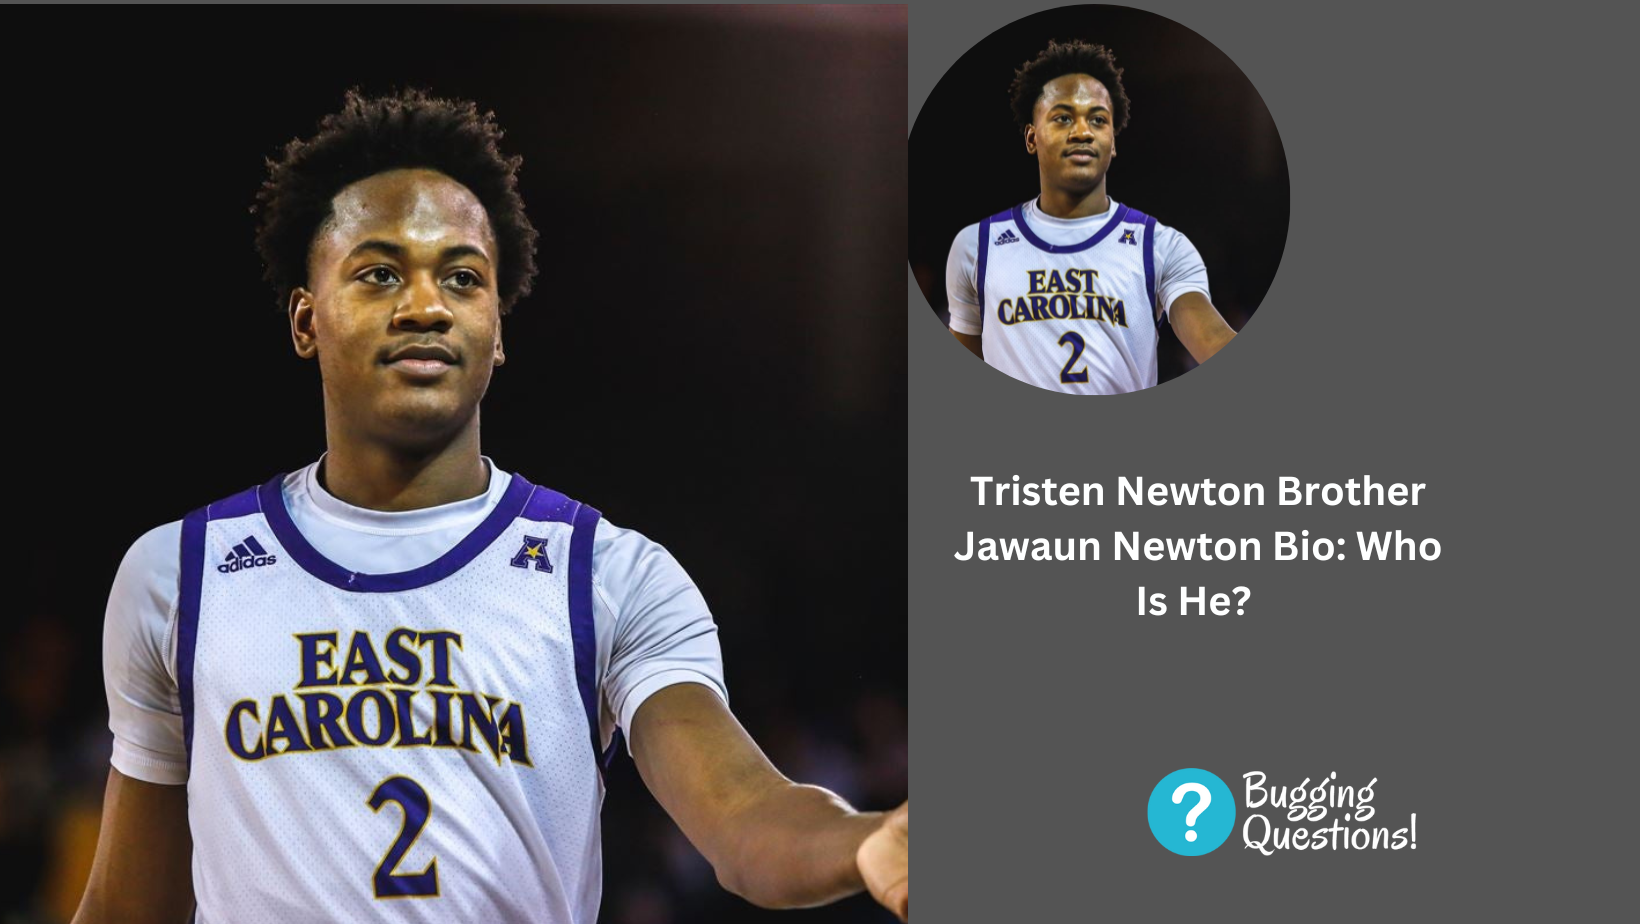 Tristen Newton Brother Jawaun Newton Bio: Who Is He?